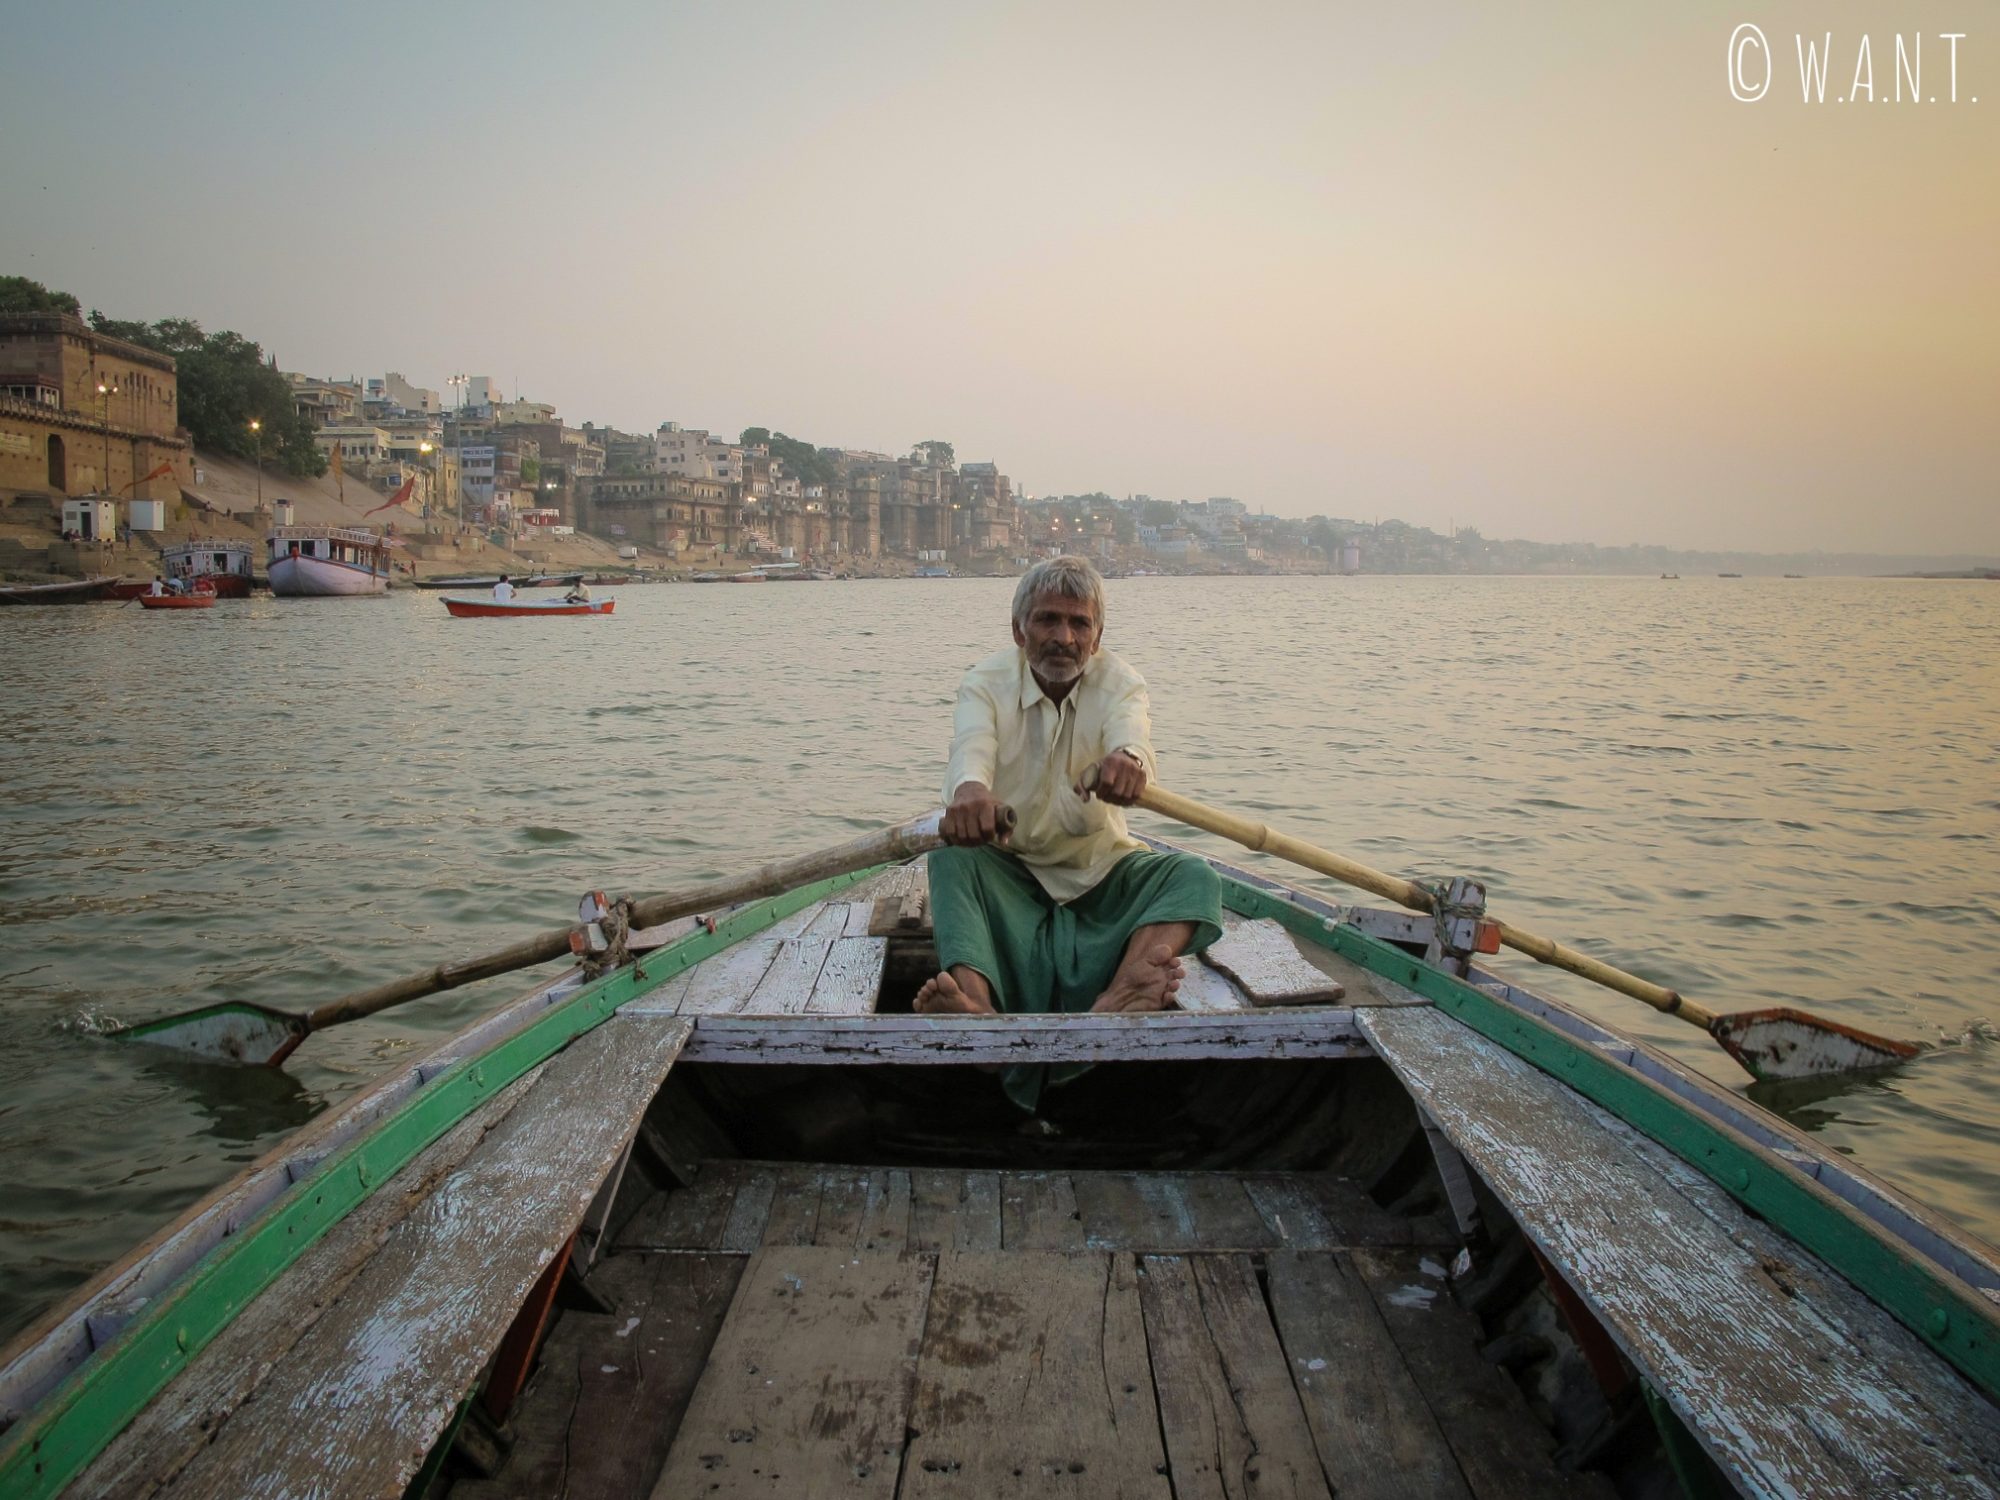 Le pilote de notre barque connaît les Ghats de Varanasi comme sa poche